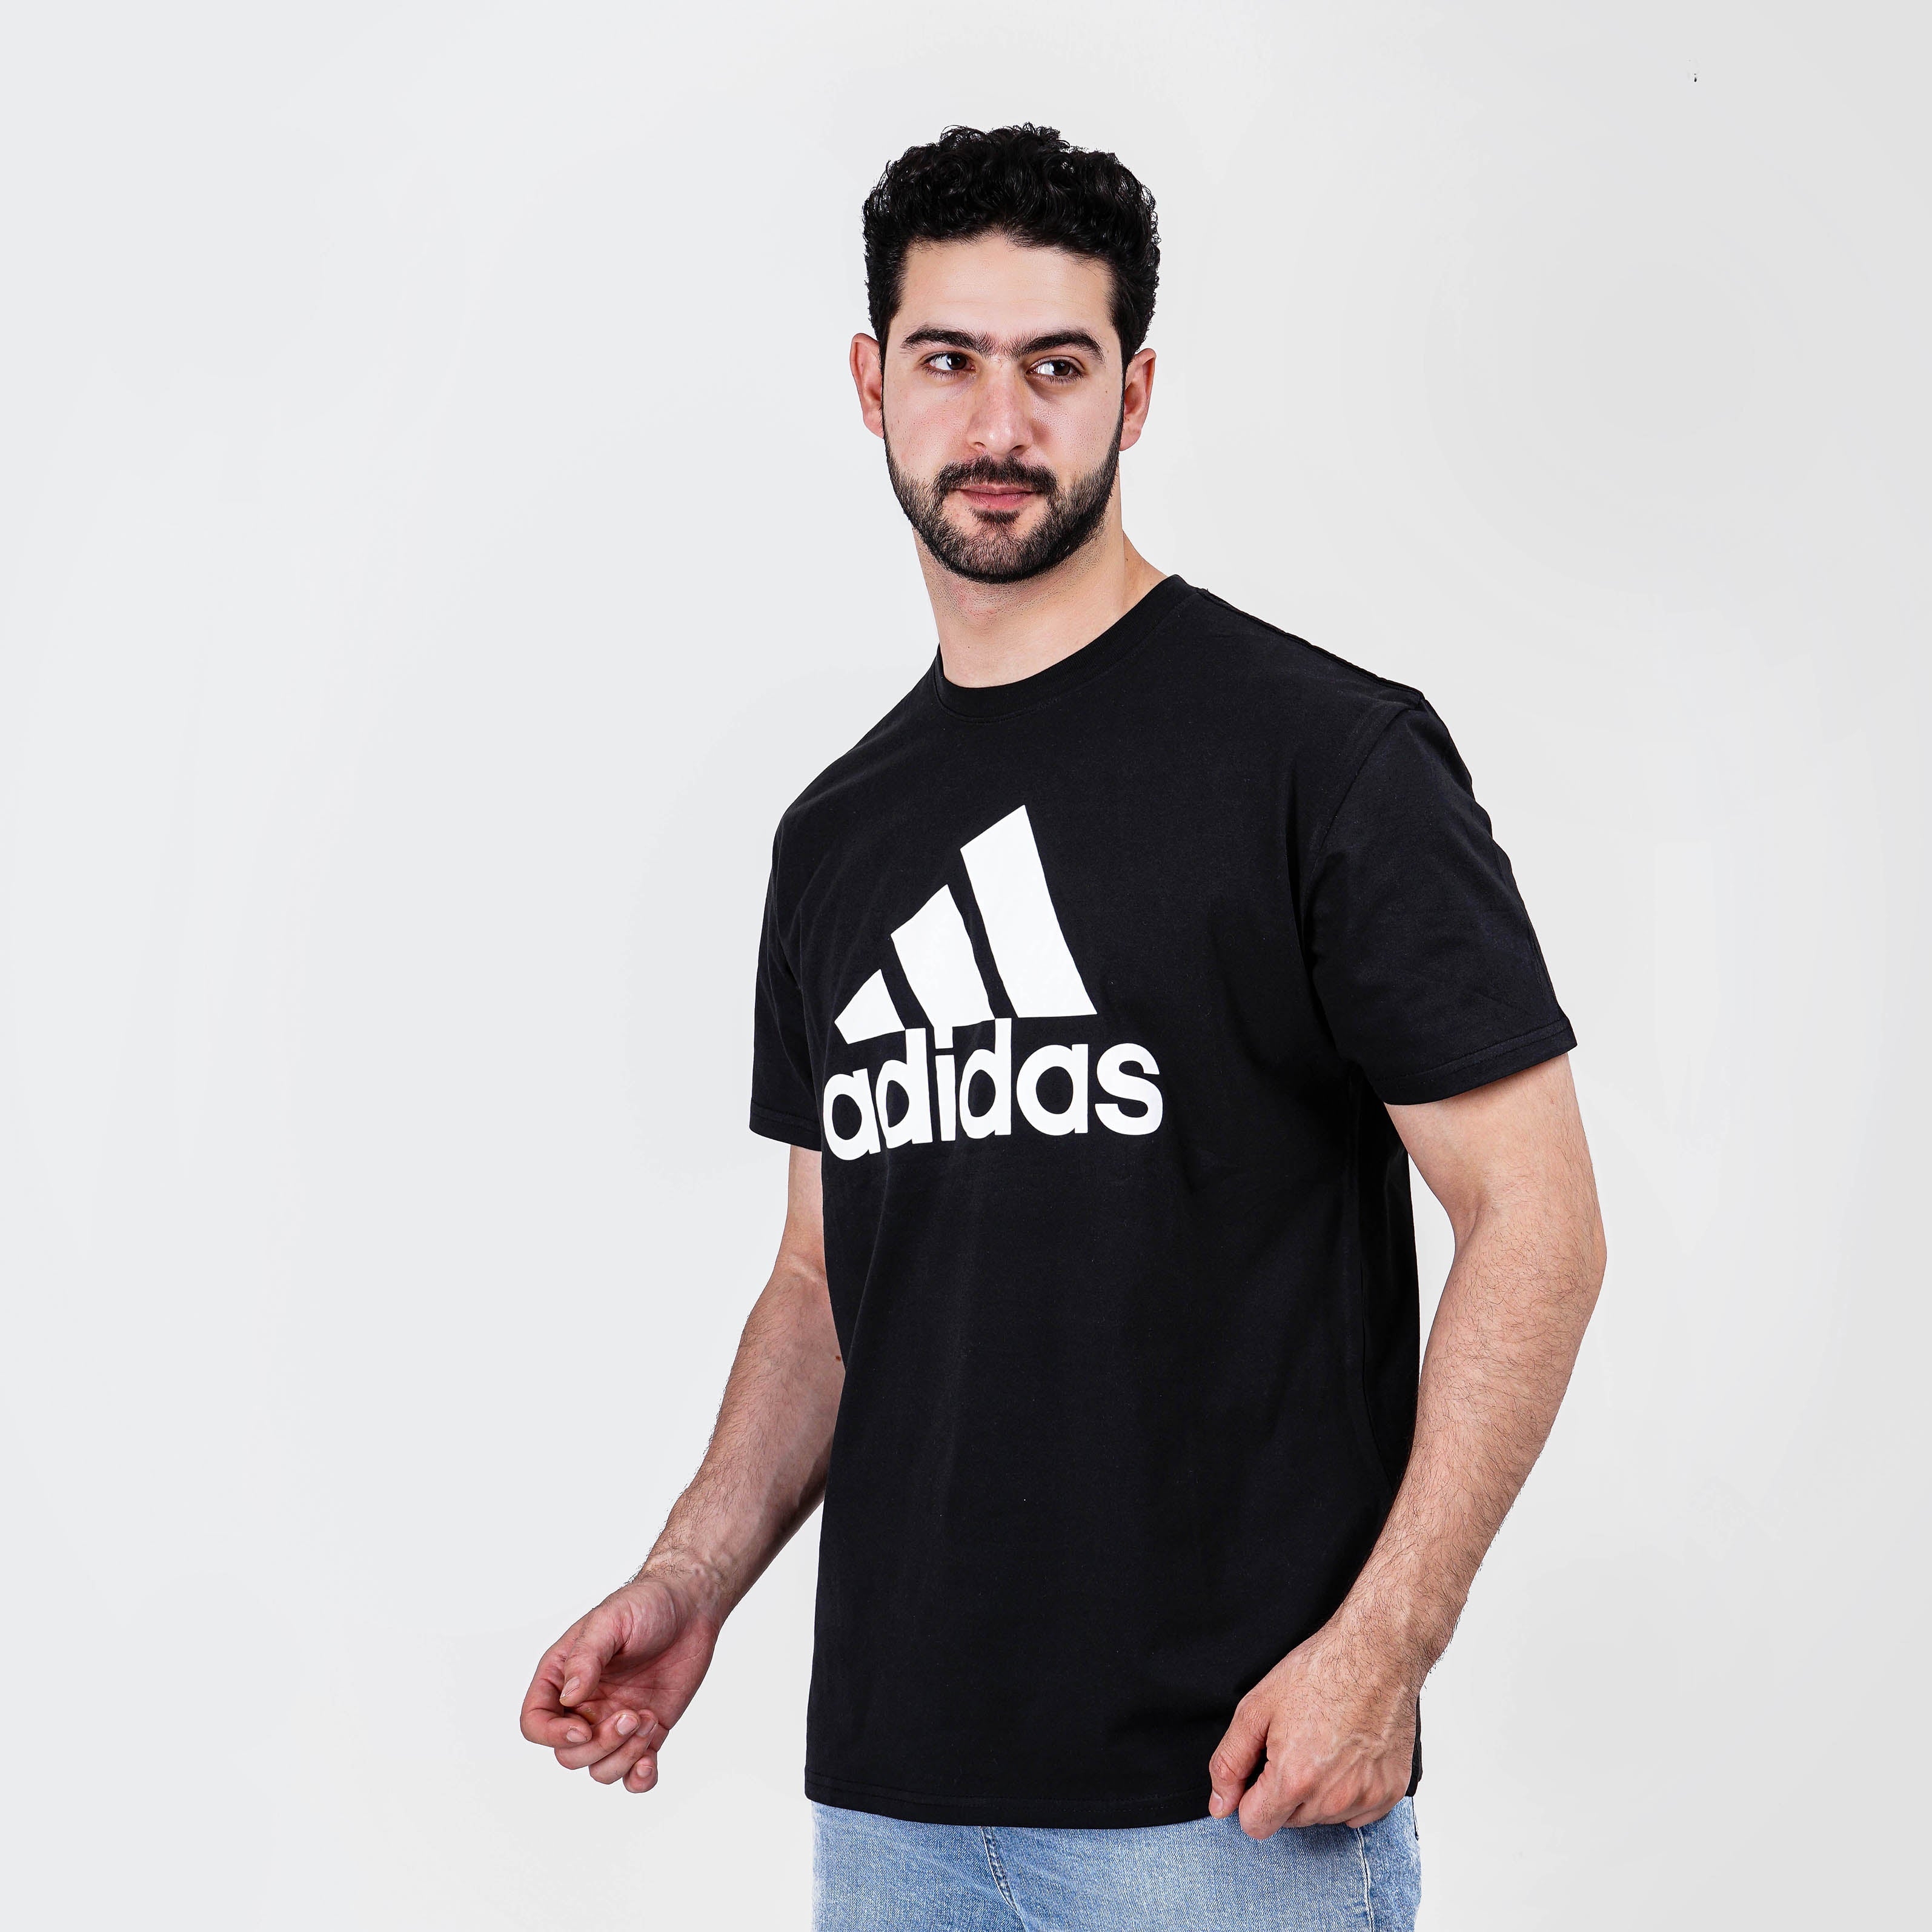 Original Adidas Black Tee with white logo - Marca Deals - Adidas